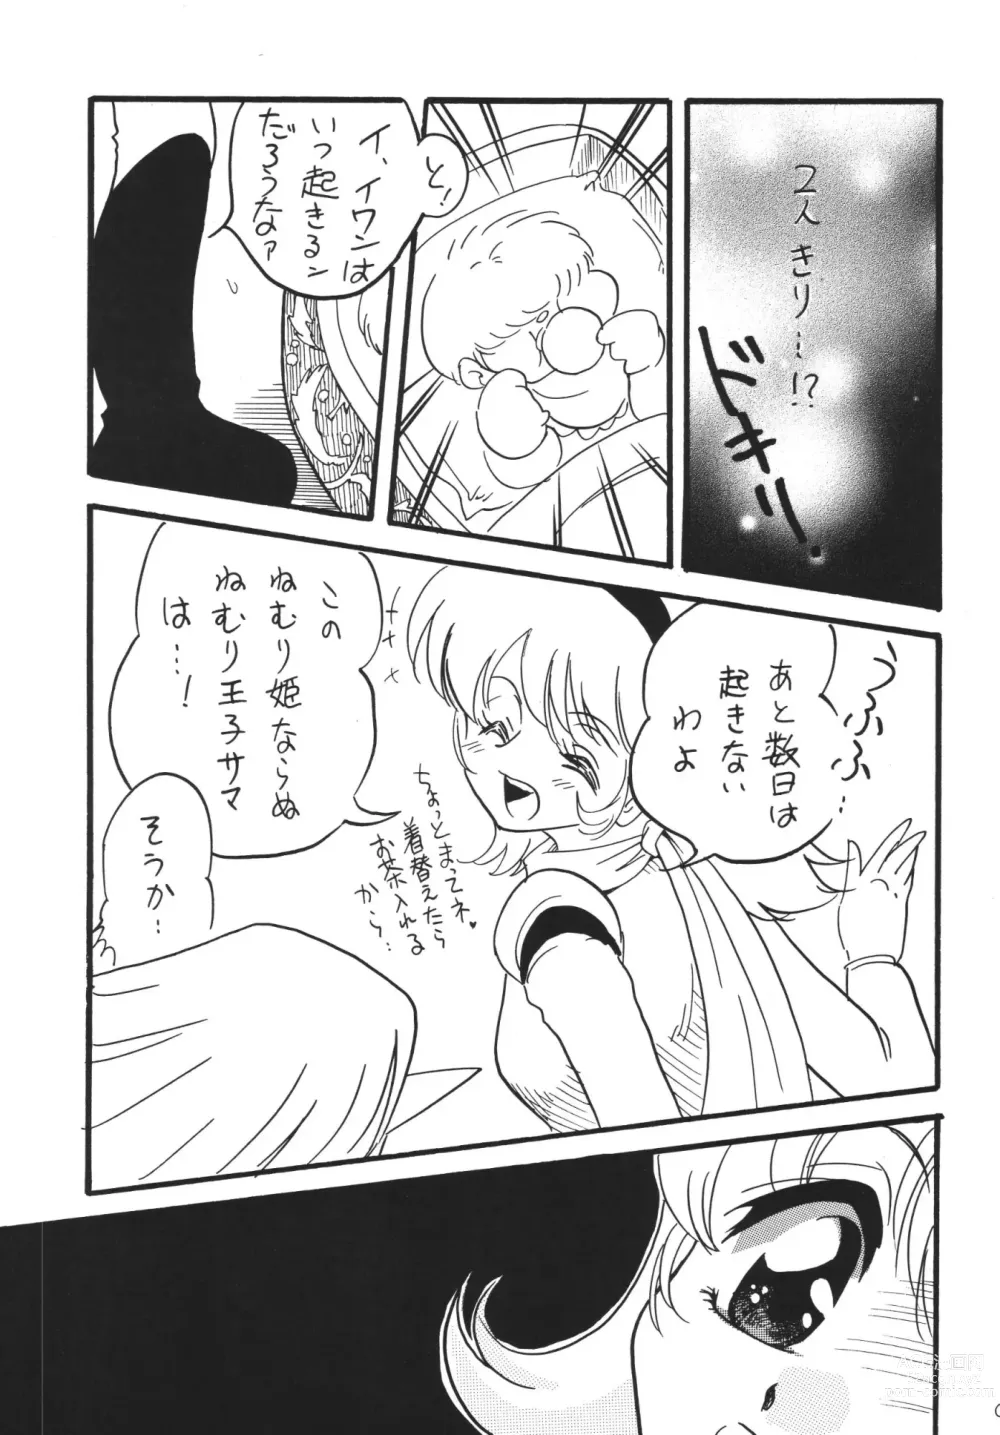 Page 9 of doujinshi Jet Kiryuu no Komoriuta - Jet Stream Lullaby